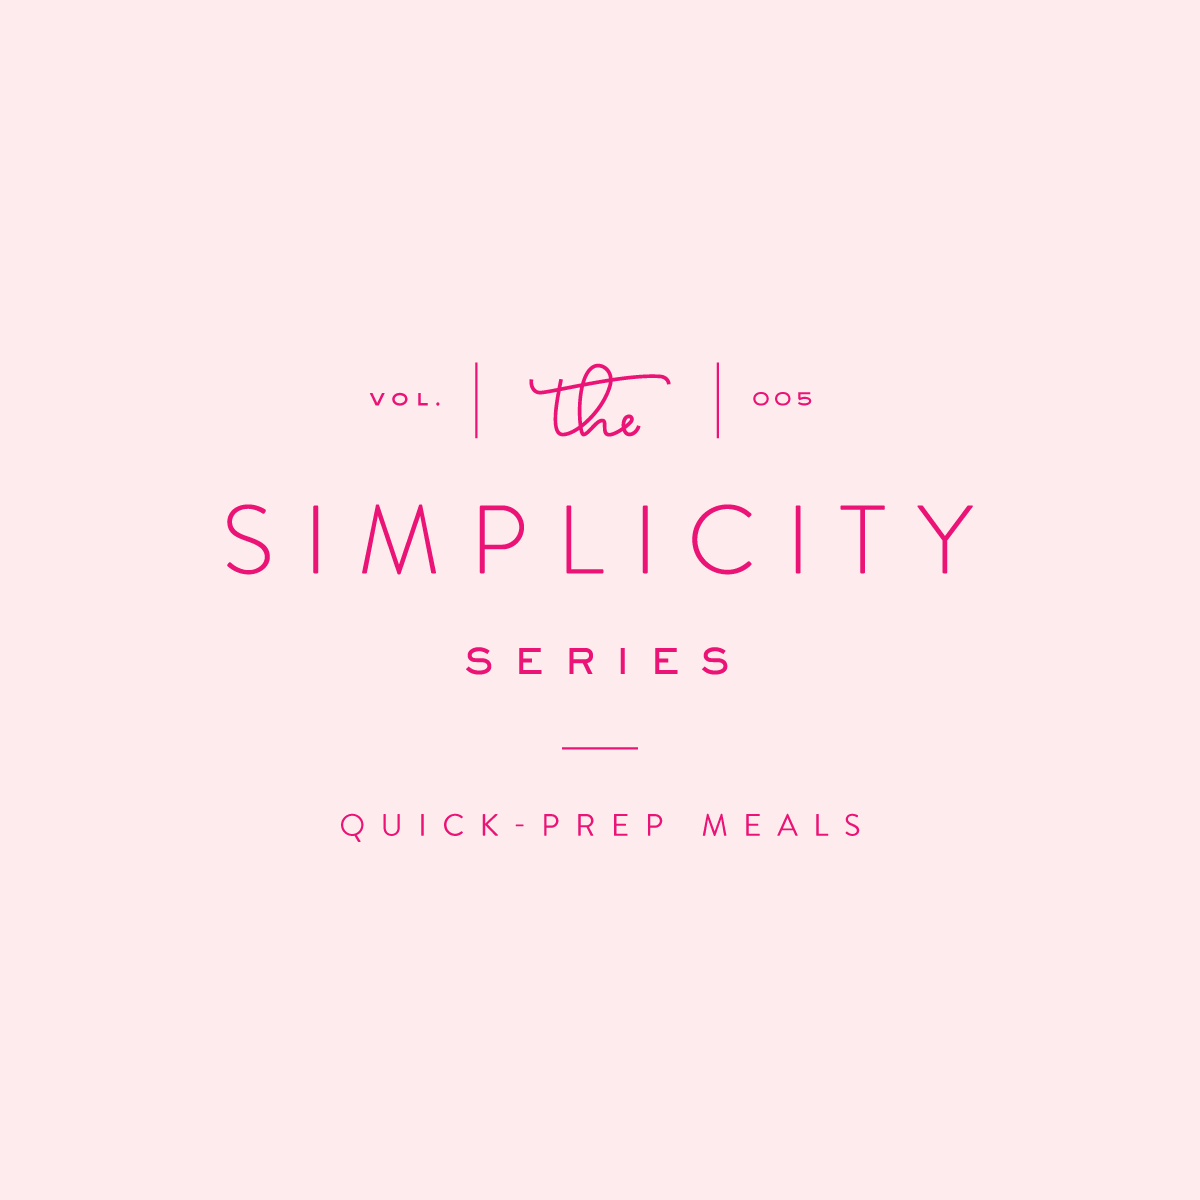 Simplified Meals: Quick-Prep Meals